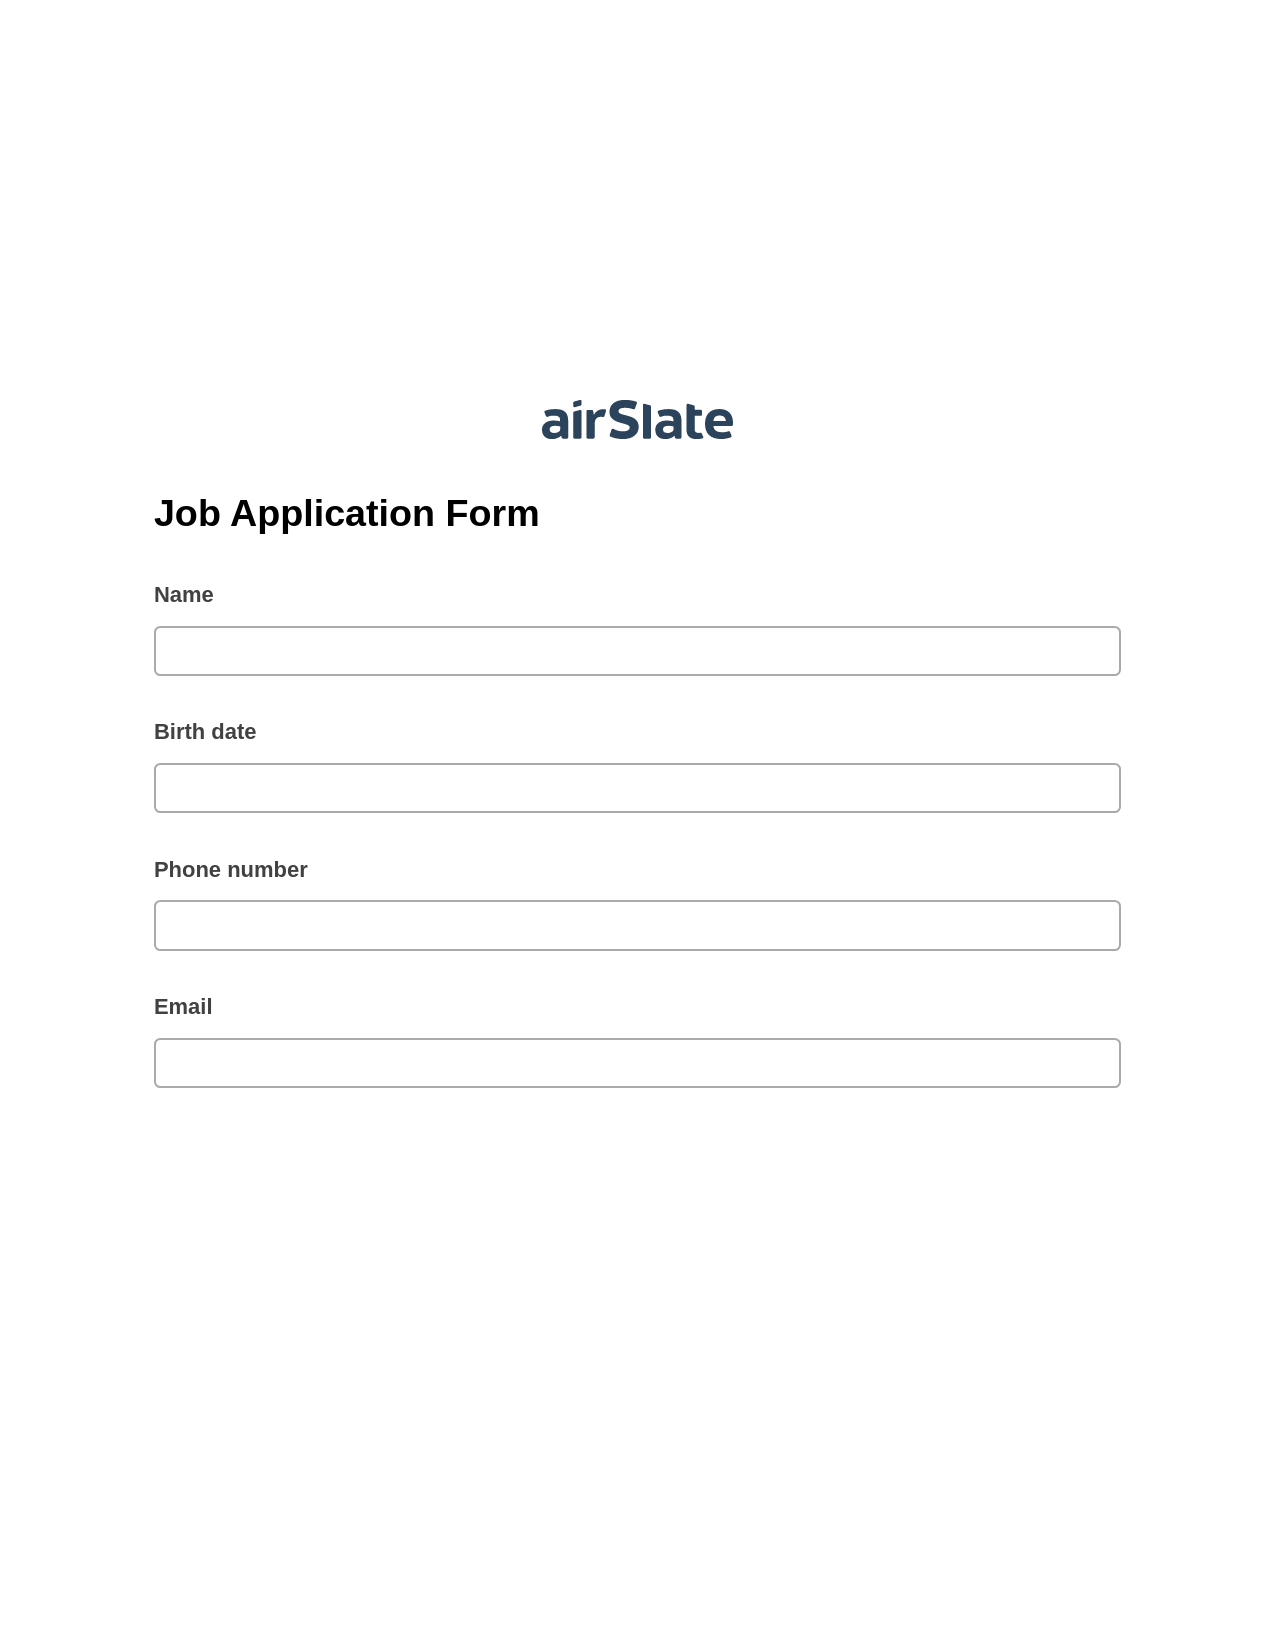 Job Application Form Pre-fill from CSV File Dropdown Options Bot, Audit Trail Bot, Box Bot